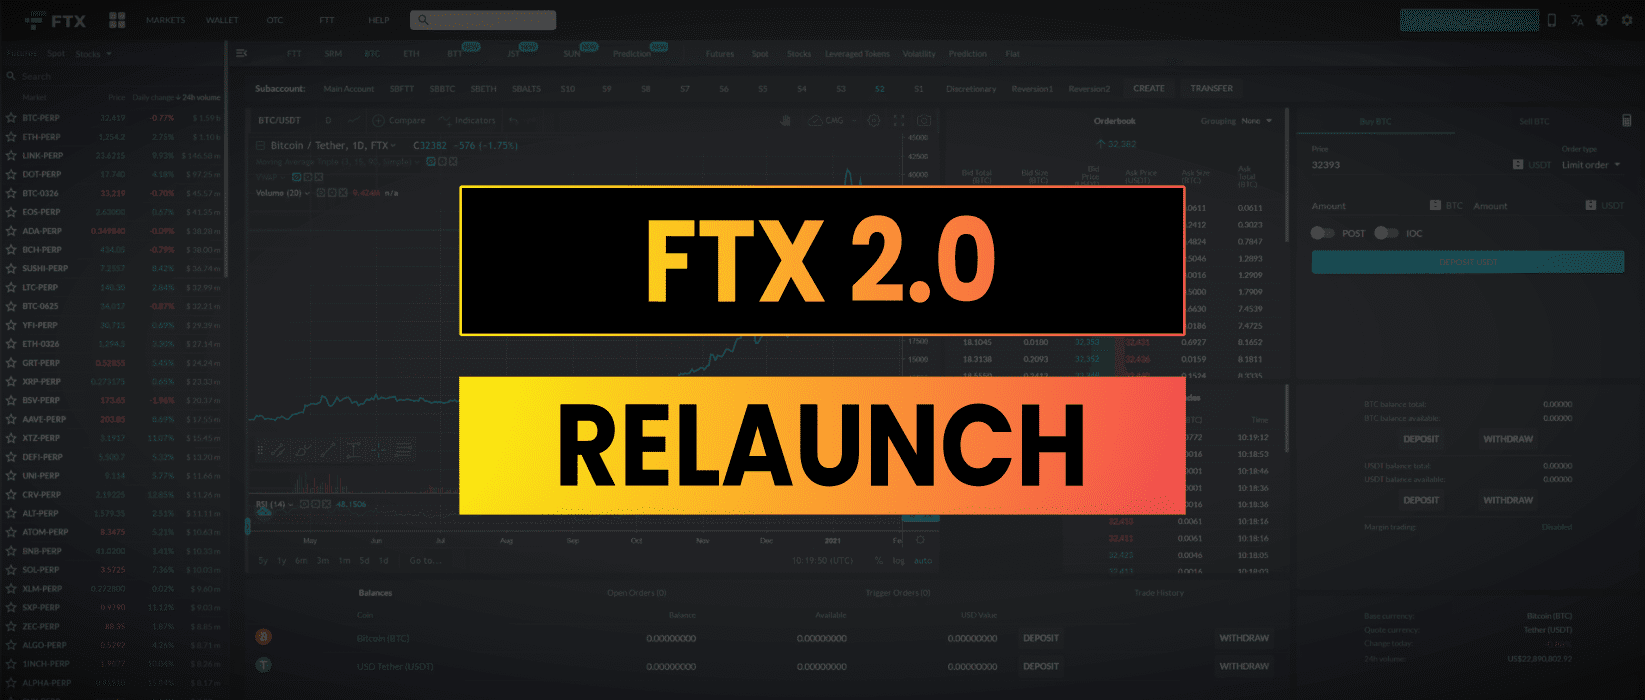 FTX 2.0 relaunch